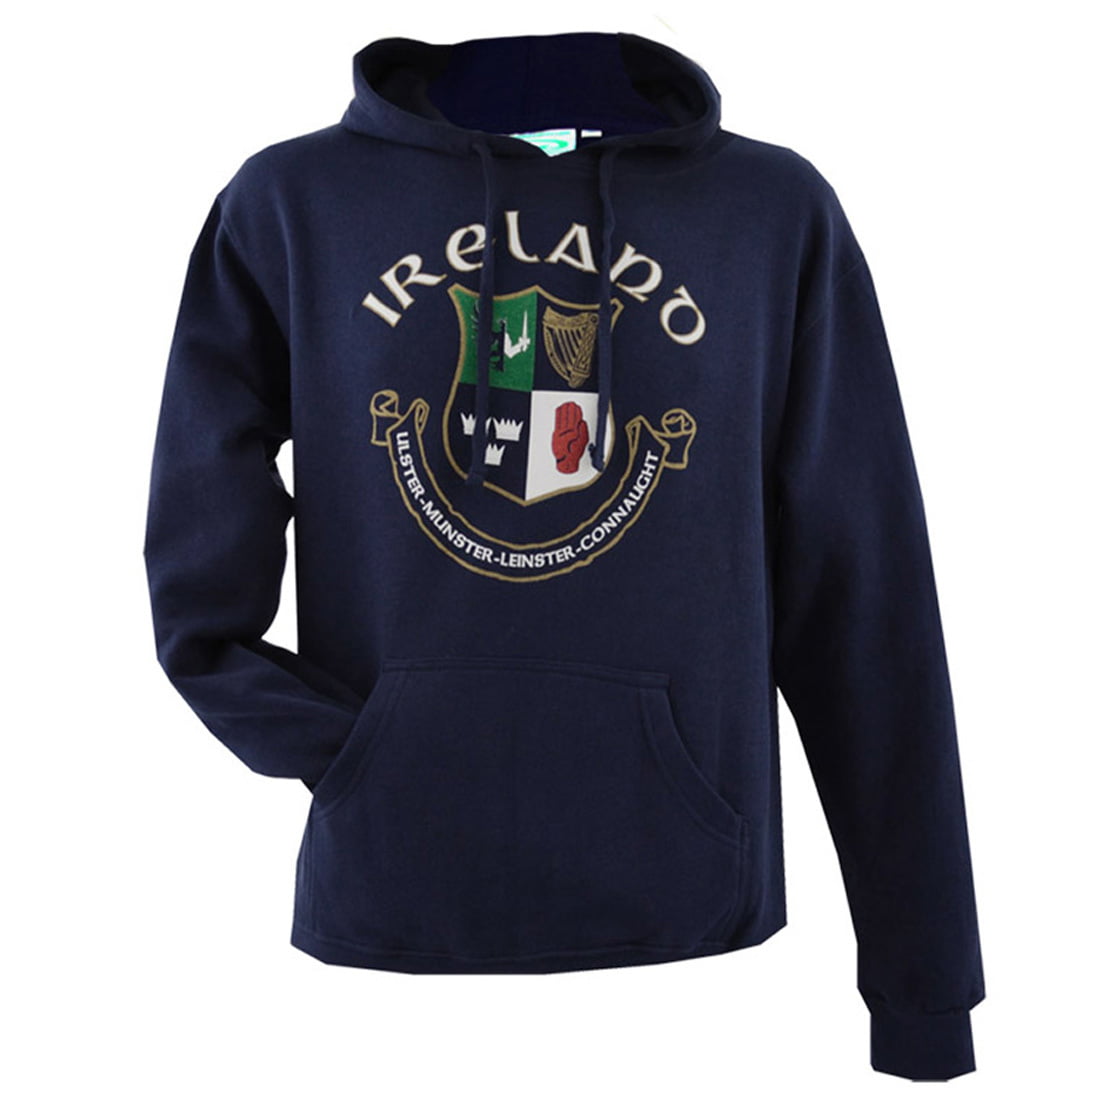 Lansdowne Navy Ireland Shamrock Crest Sweatshirt 